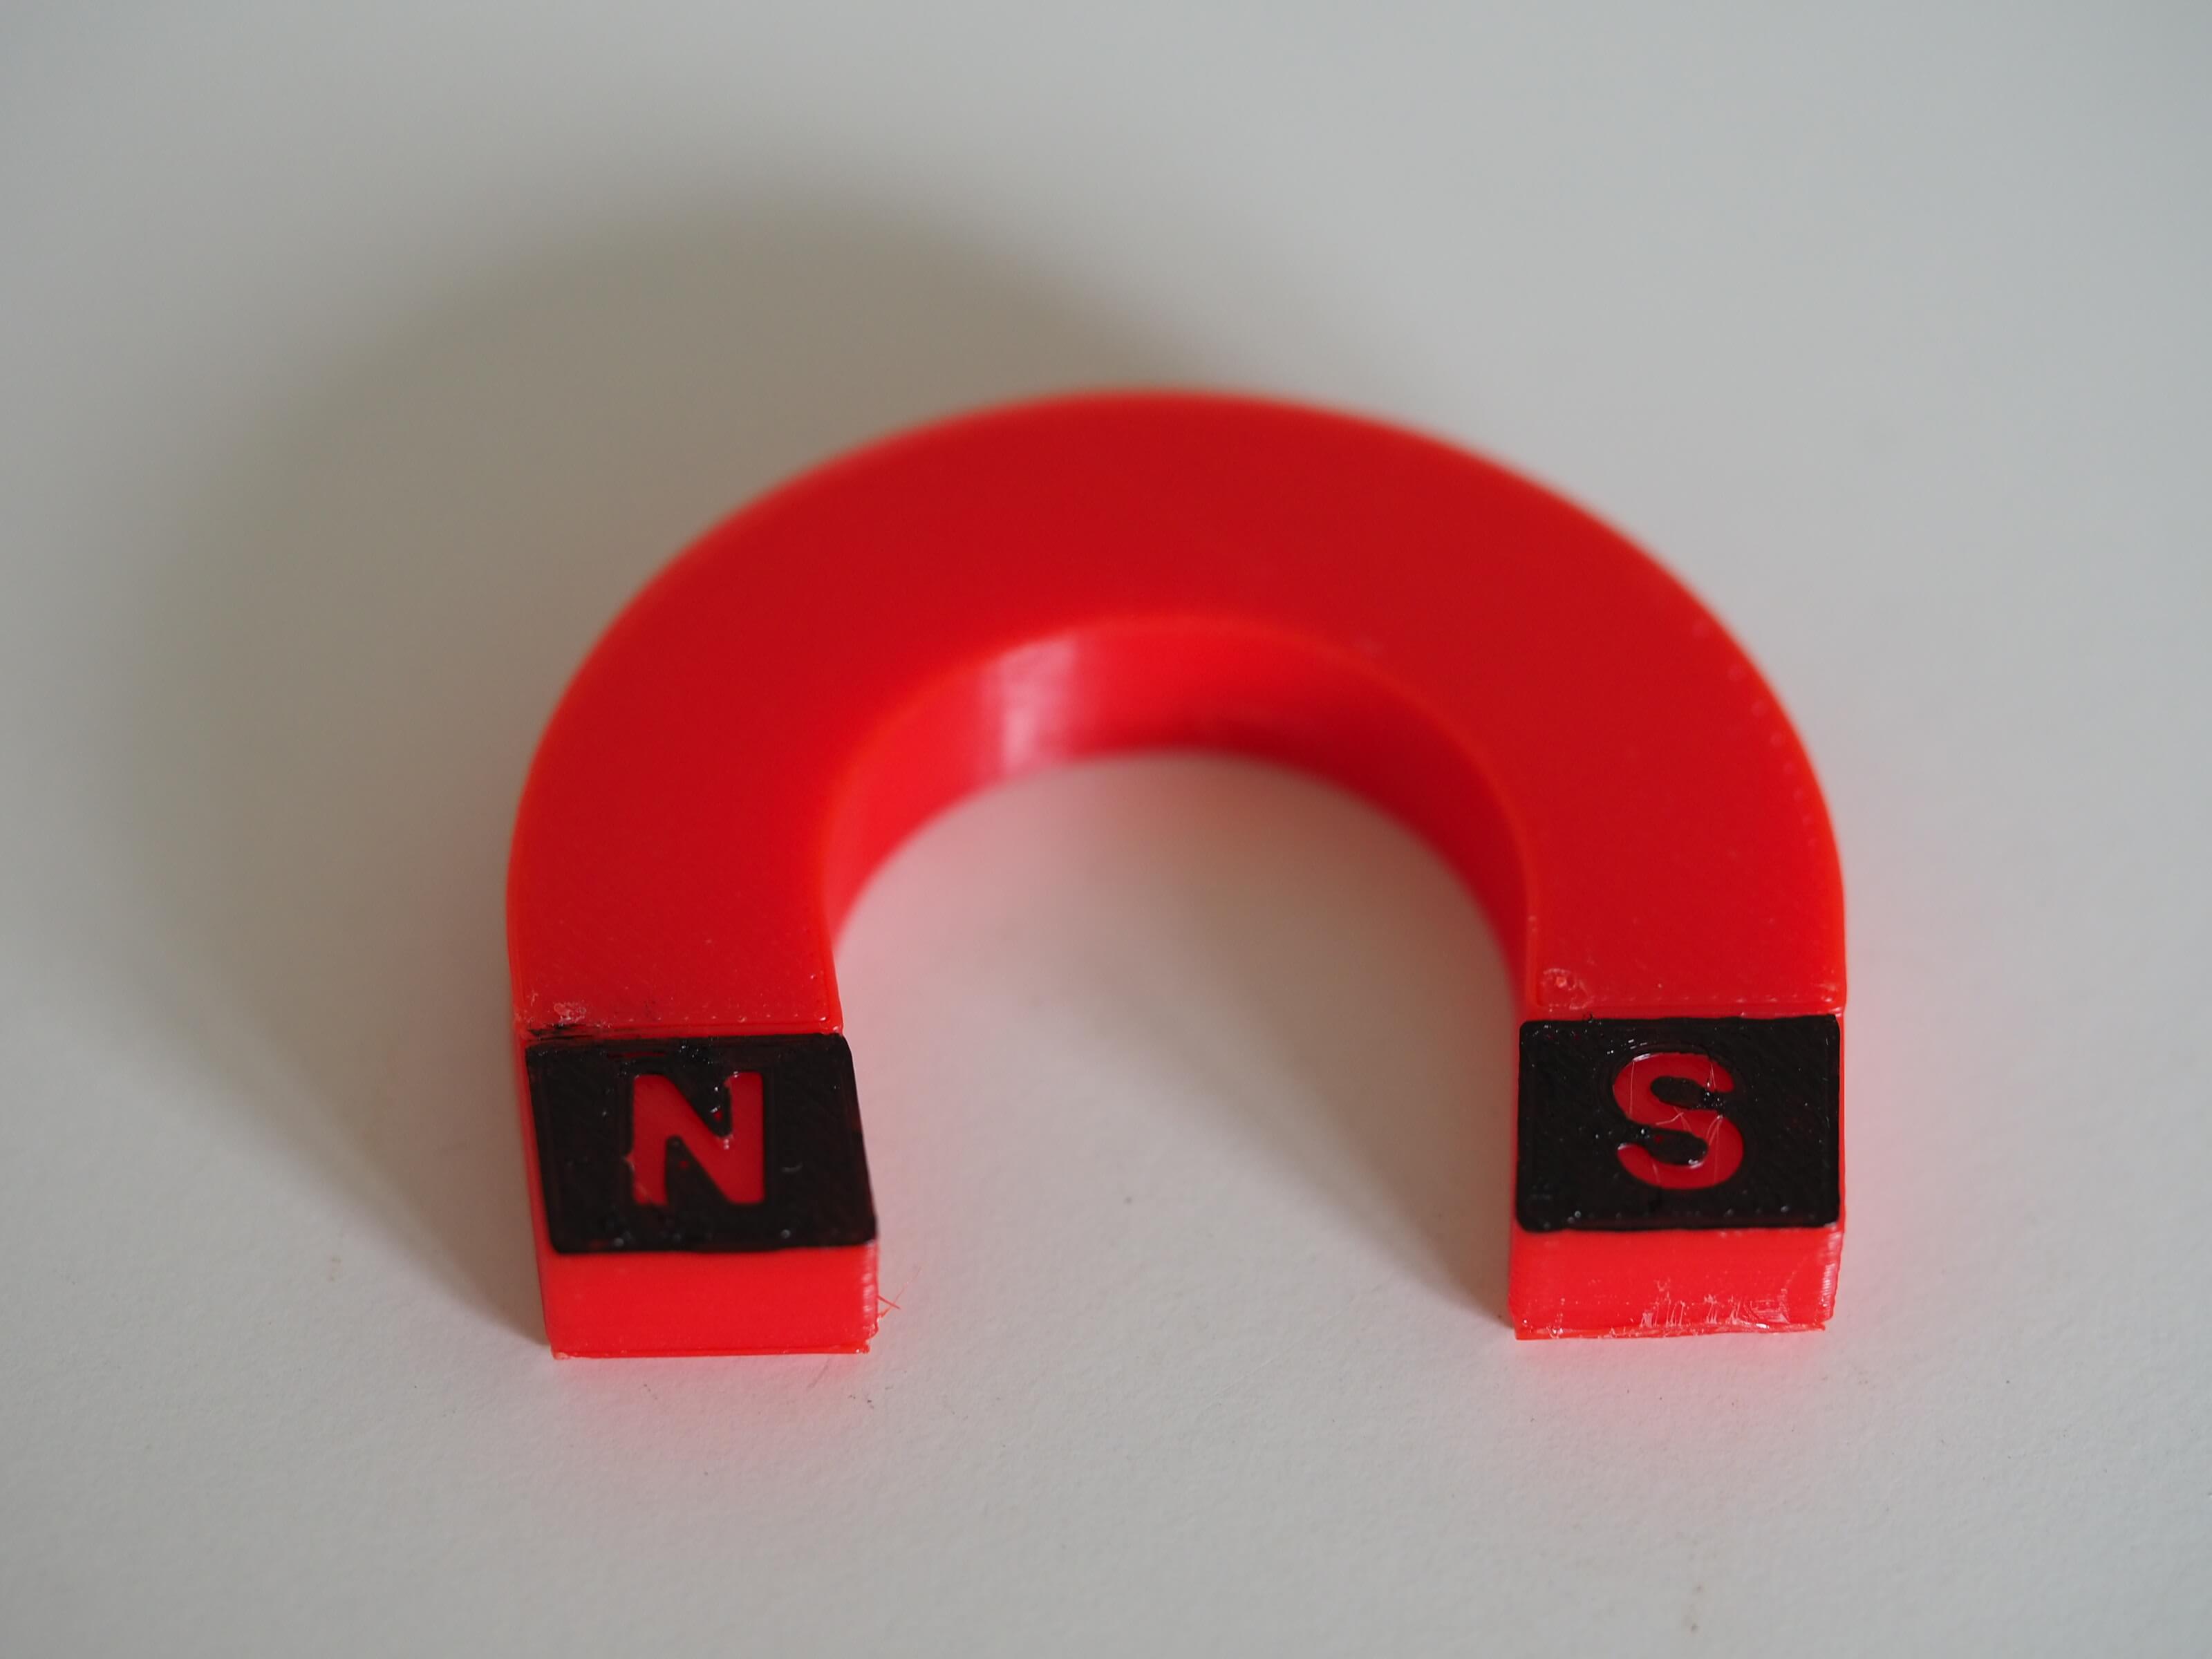 Quick Slide in Paper Fridge Magnet (uses Ø8 x 2.8 mm neodymium magnet)